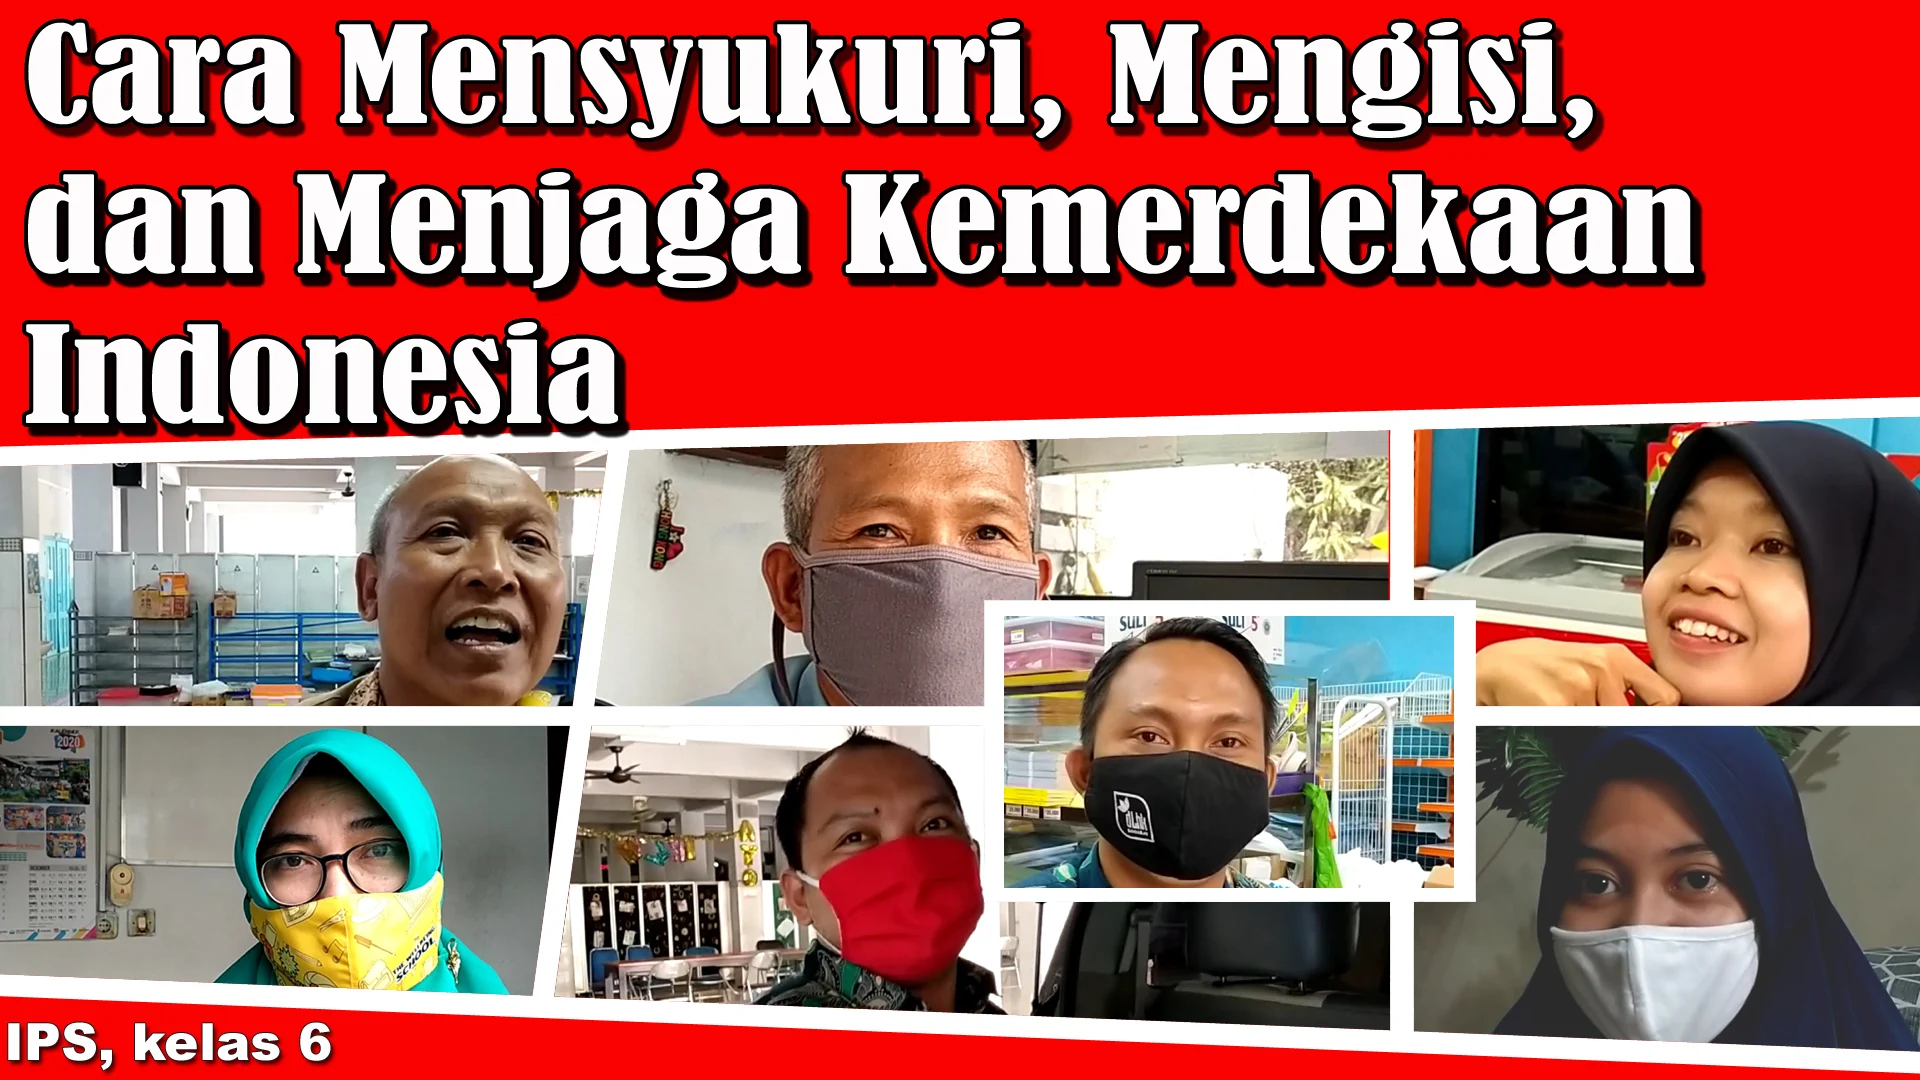 Cara Bersyukur atas Kemerdekaan Indonesia